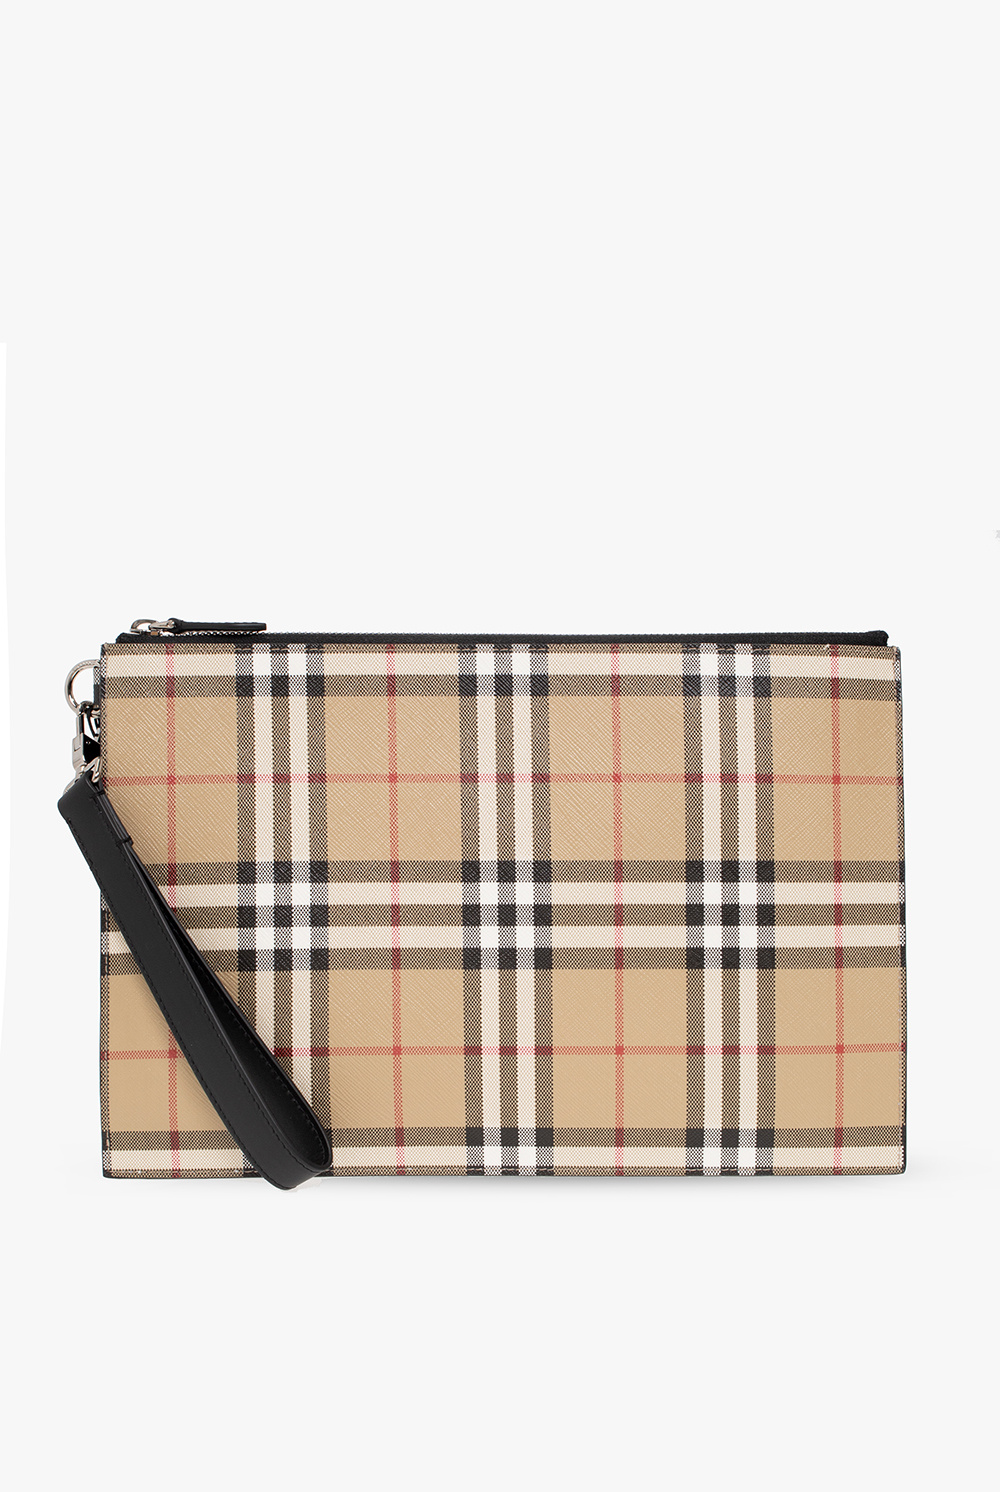 Burberry ‘Edin’ handbag